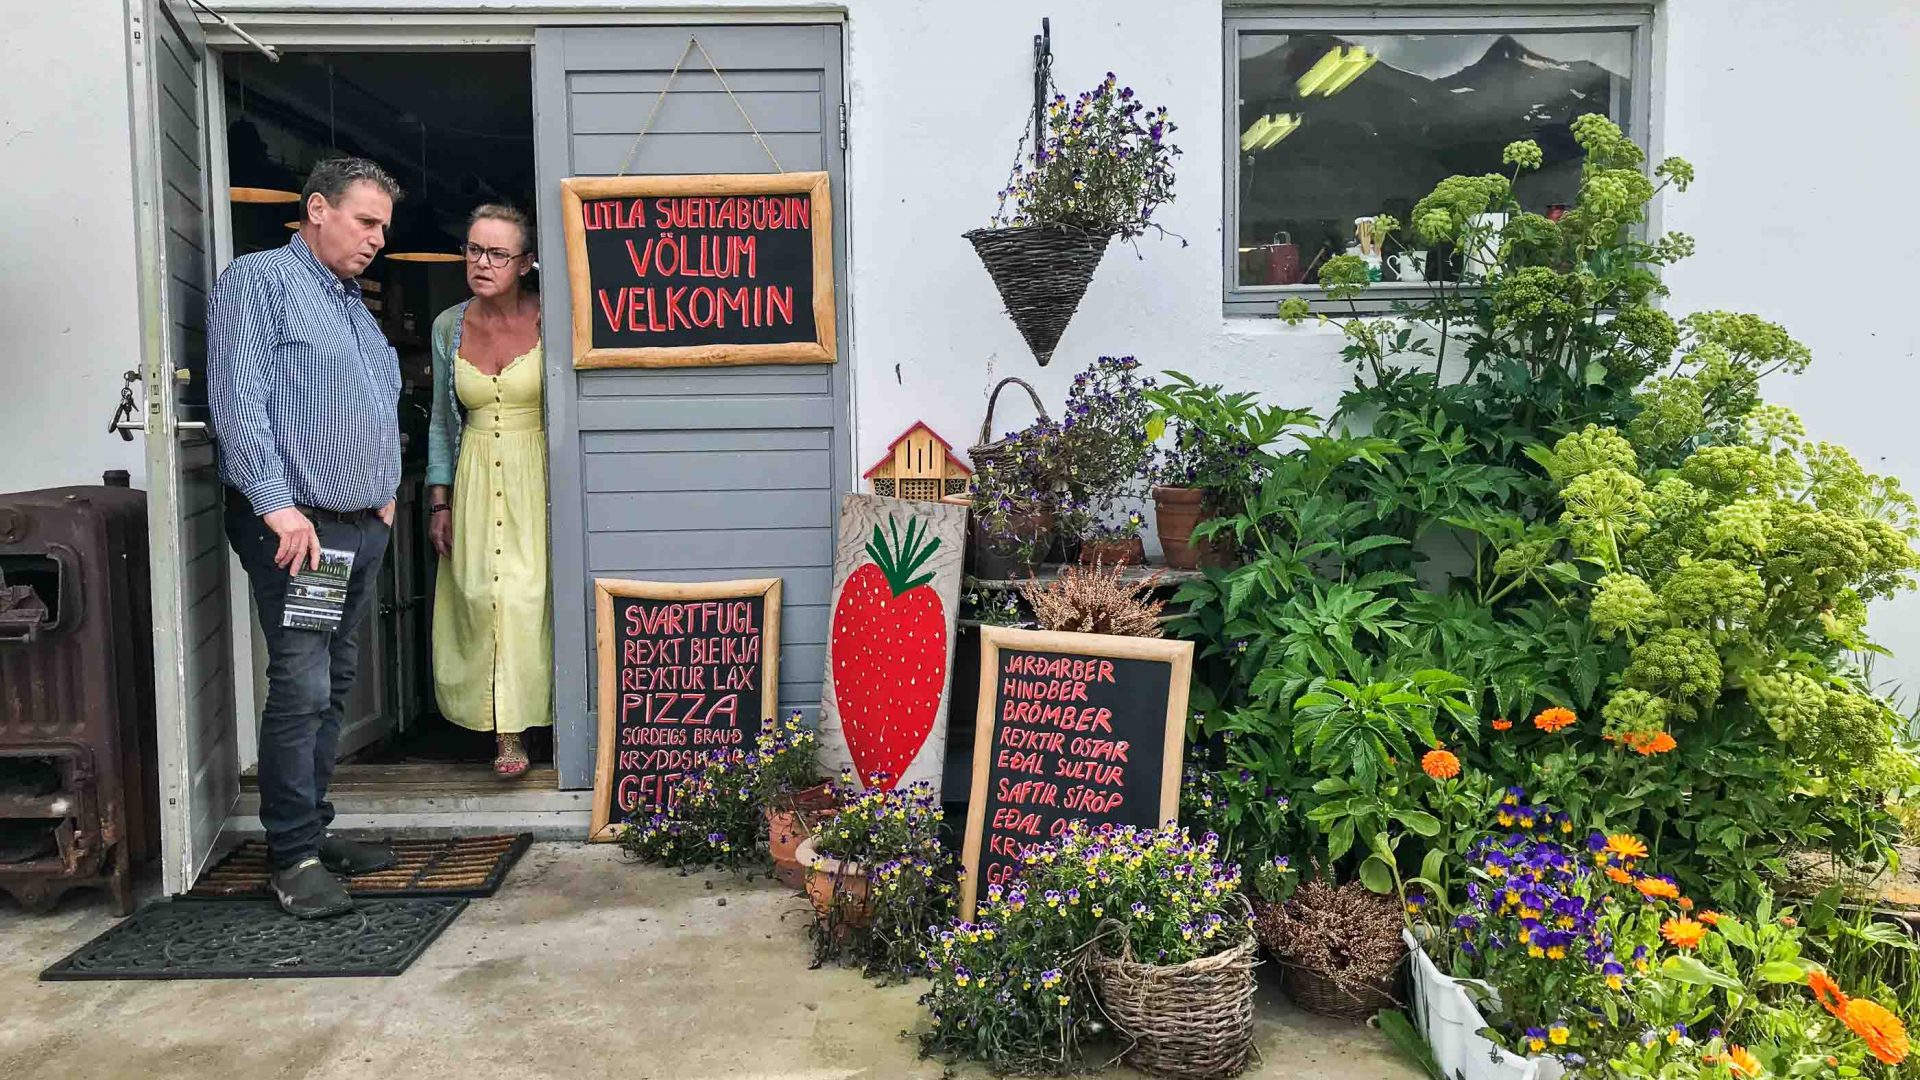 Bjarni Oskarsson and his wife outside their organic farm shop in Vellir.